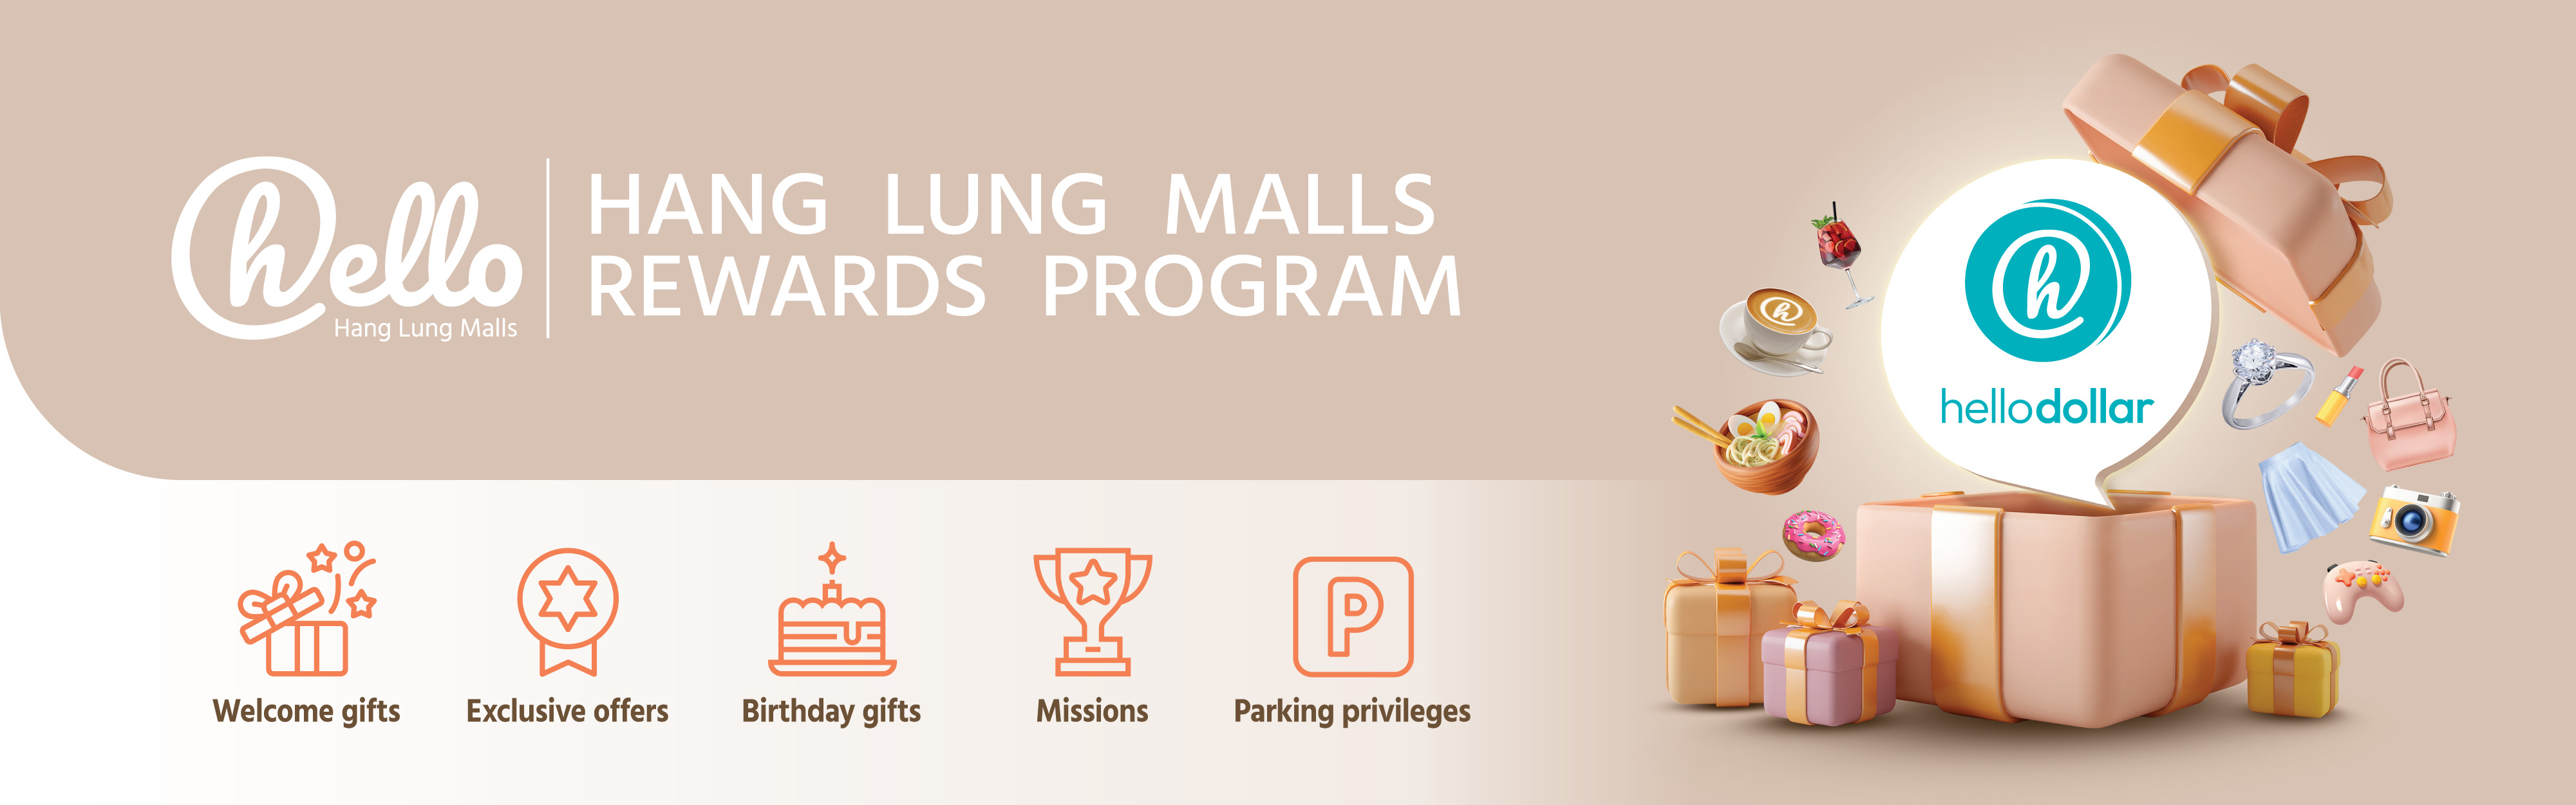 hello Hang Lung Malls Rewards Program